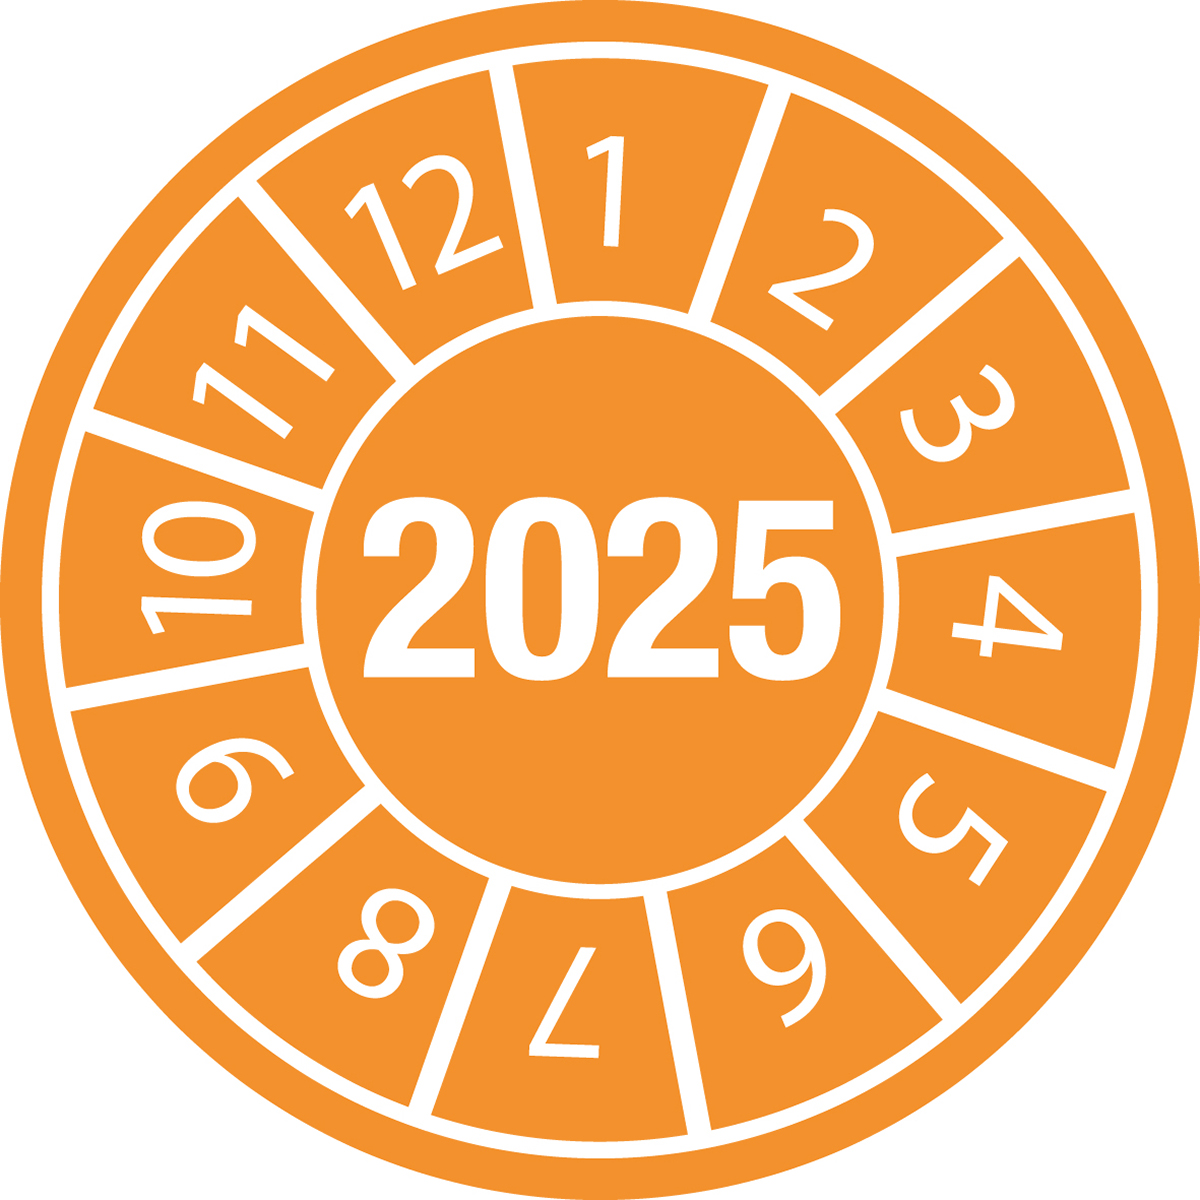 BRADY DATE 2025-DIA 15 B-429 DATE INSPECTION LBLS B-429 2025 - DIA 15 834152